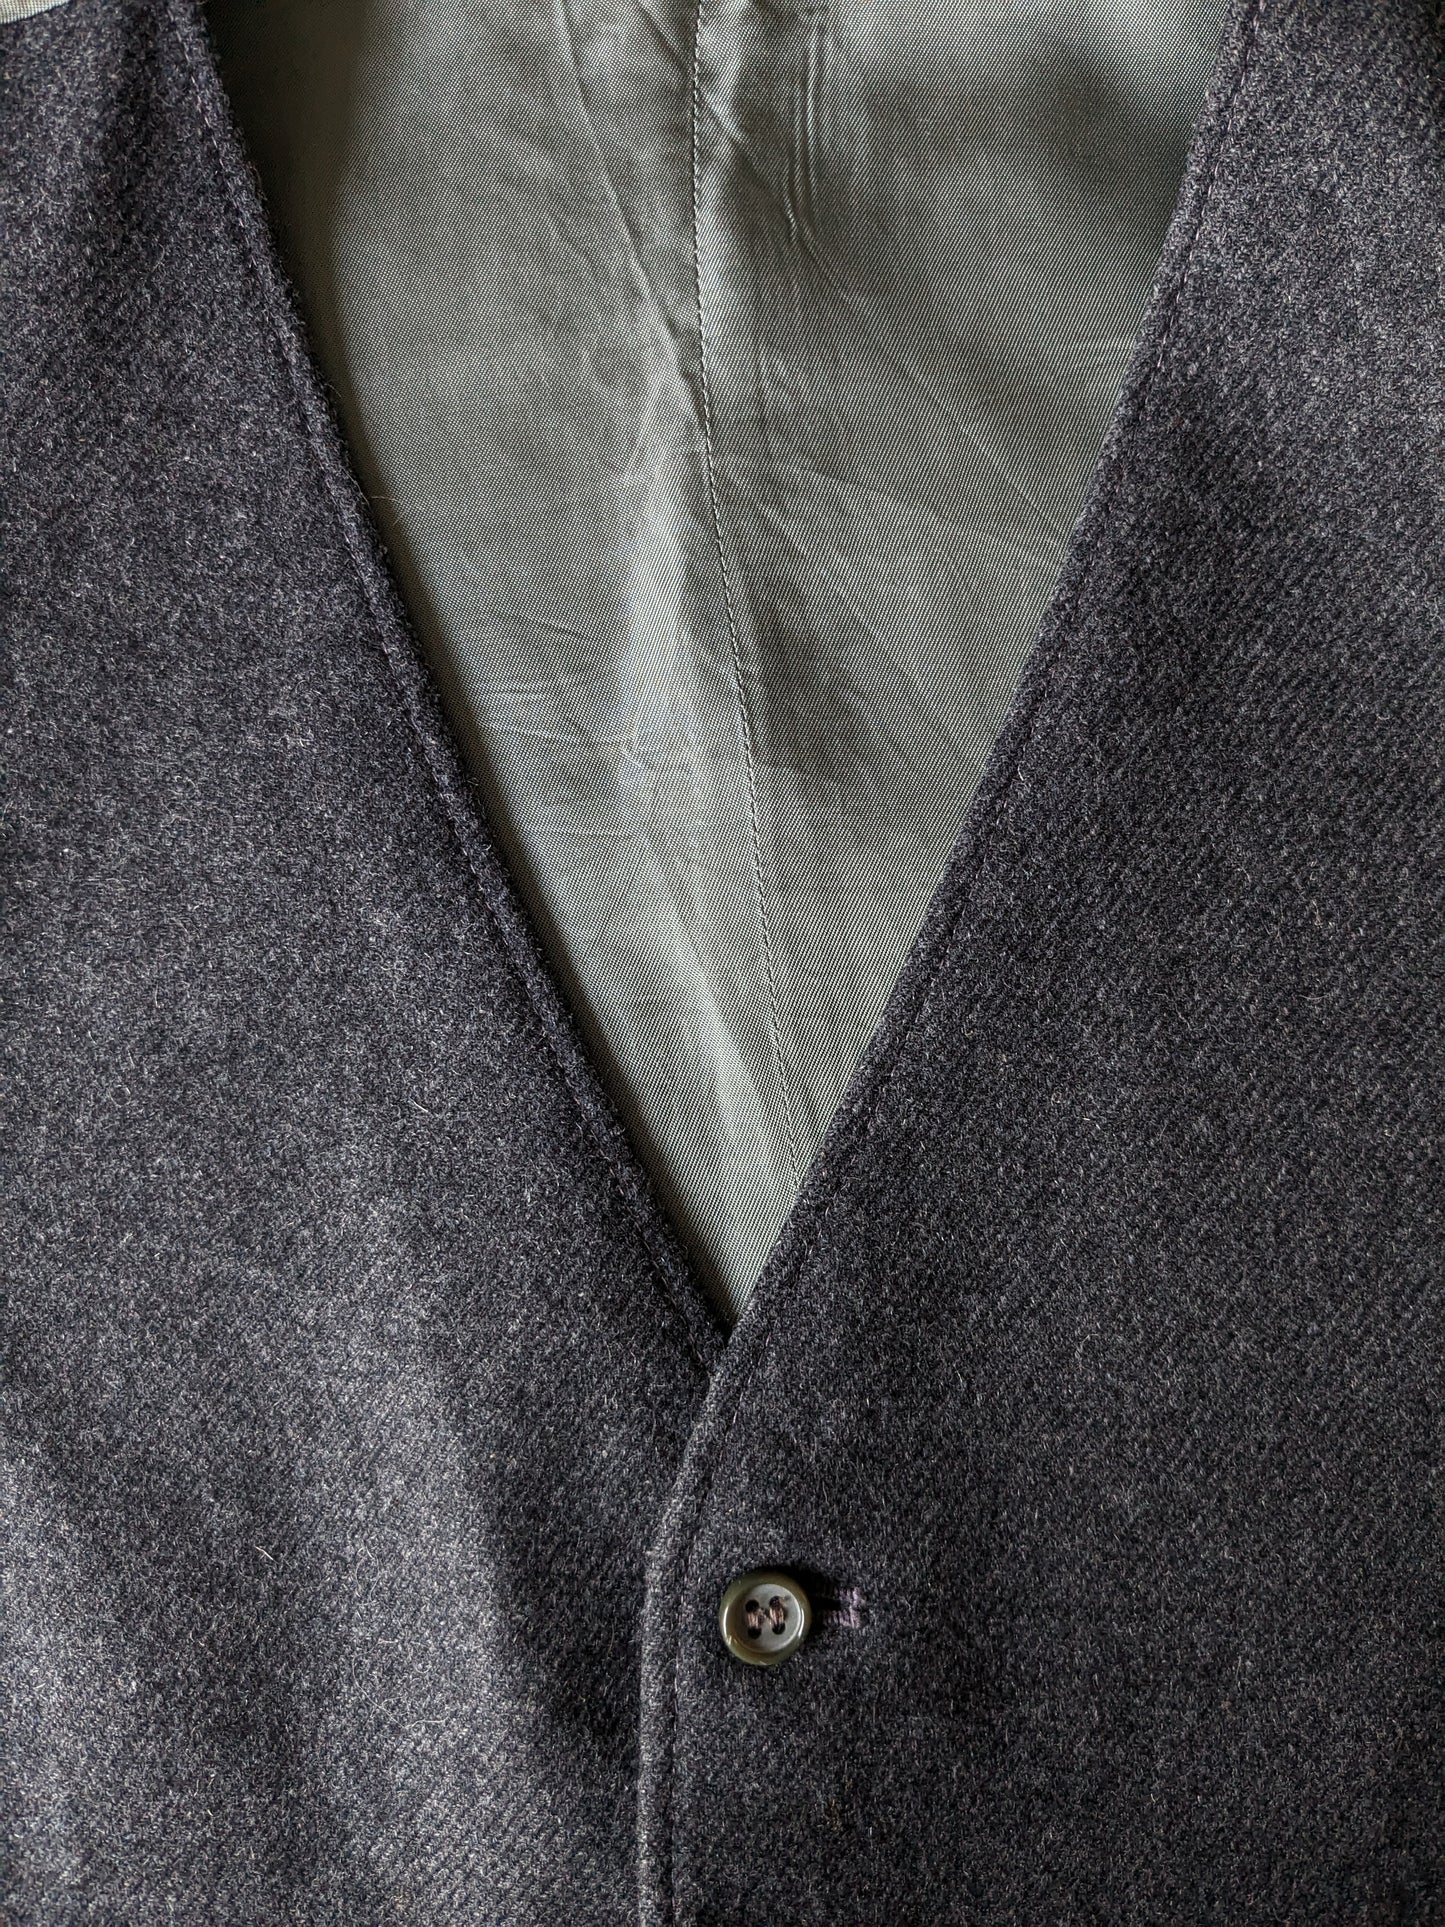 Woolen waistcoat. Dark gray mixed. Size 48. #324